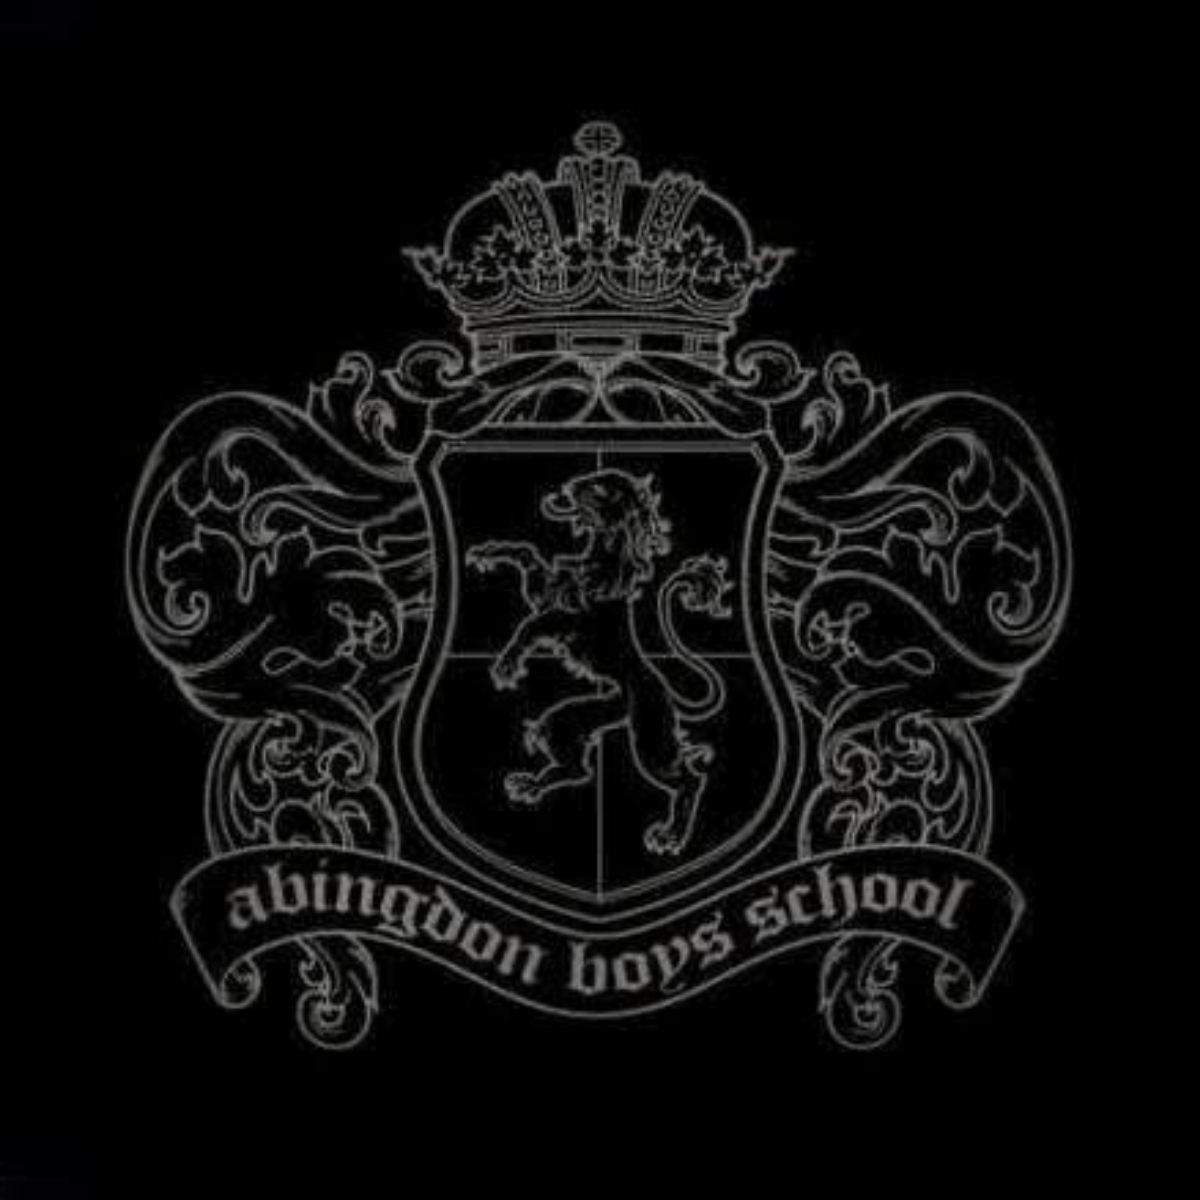 Abington Boys School - INNOCENT SORROW